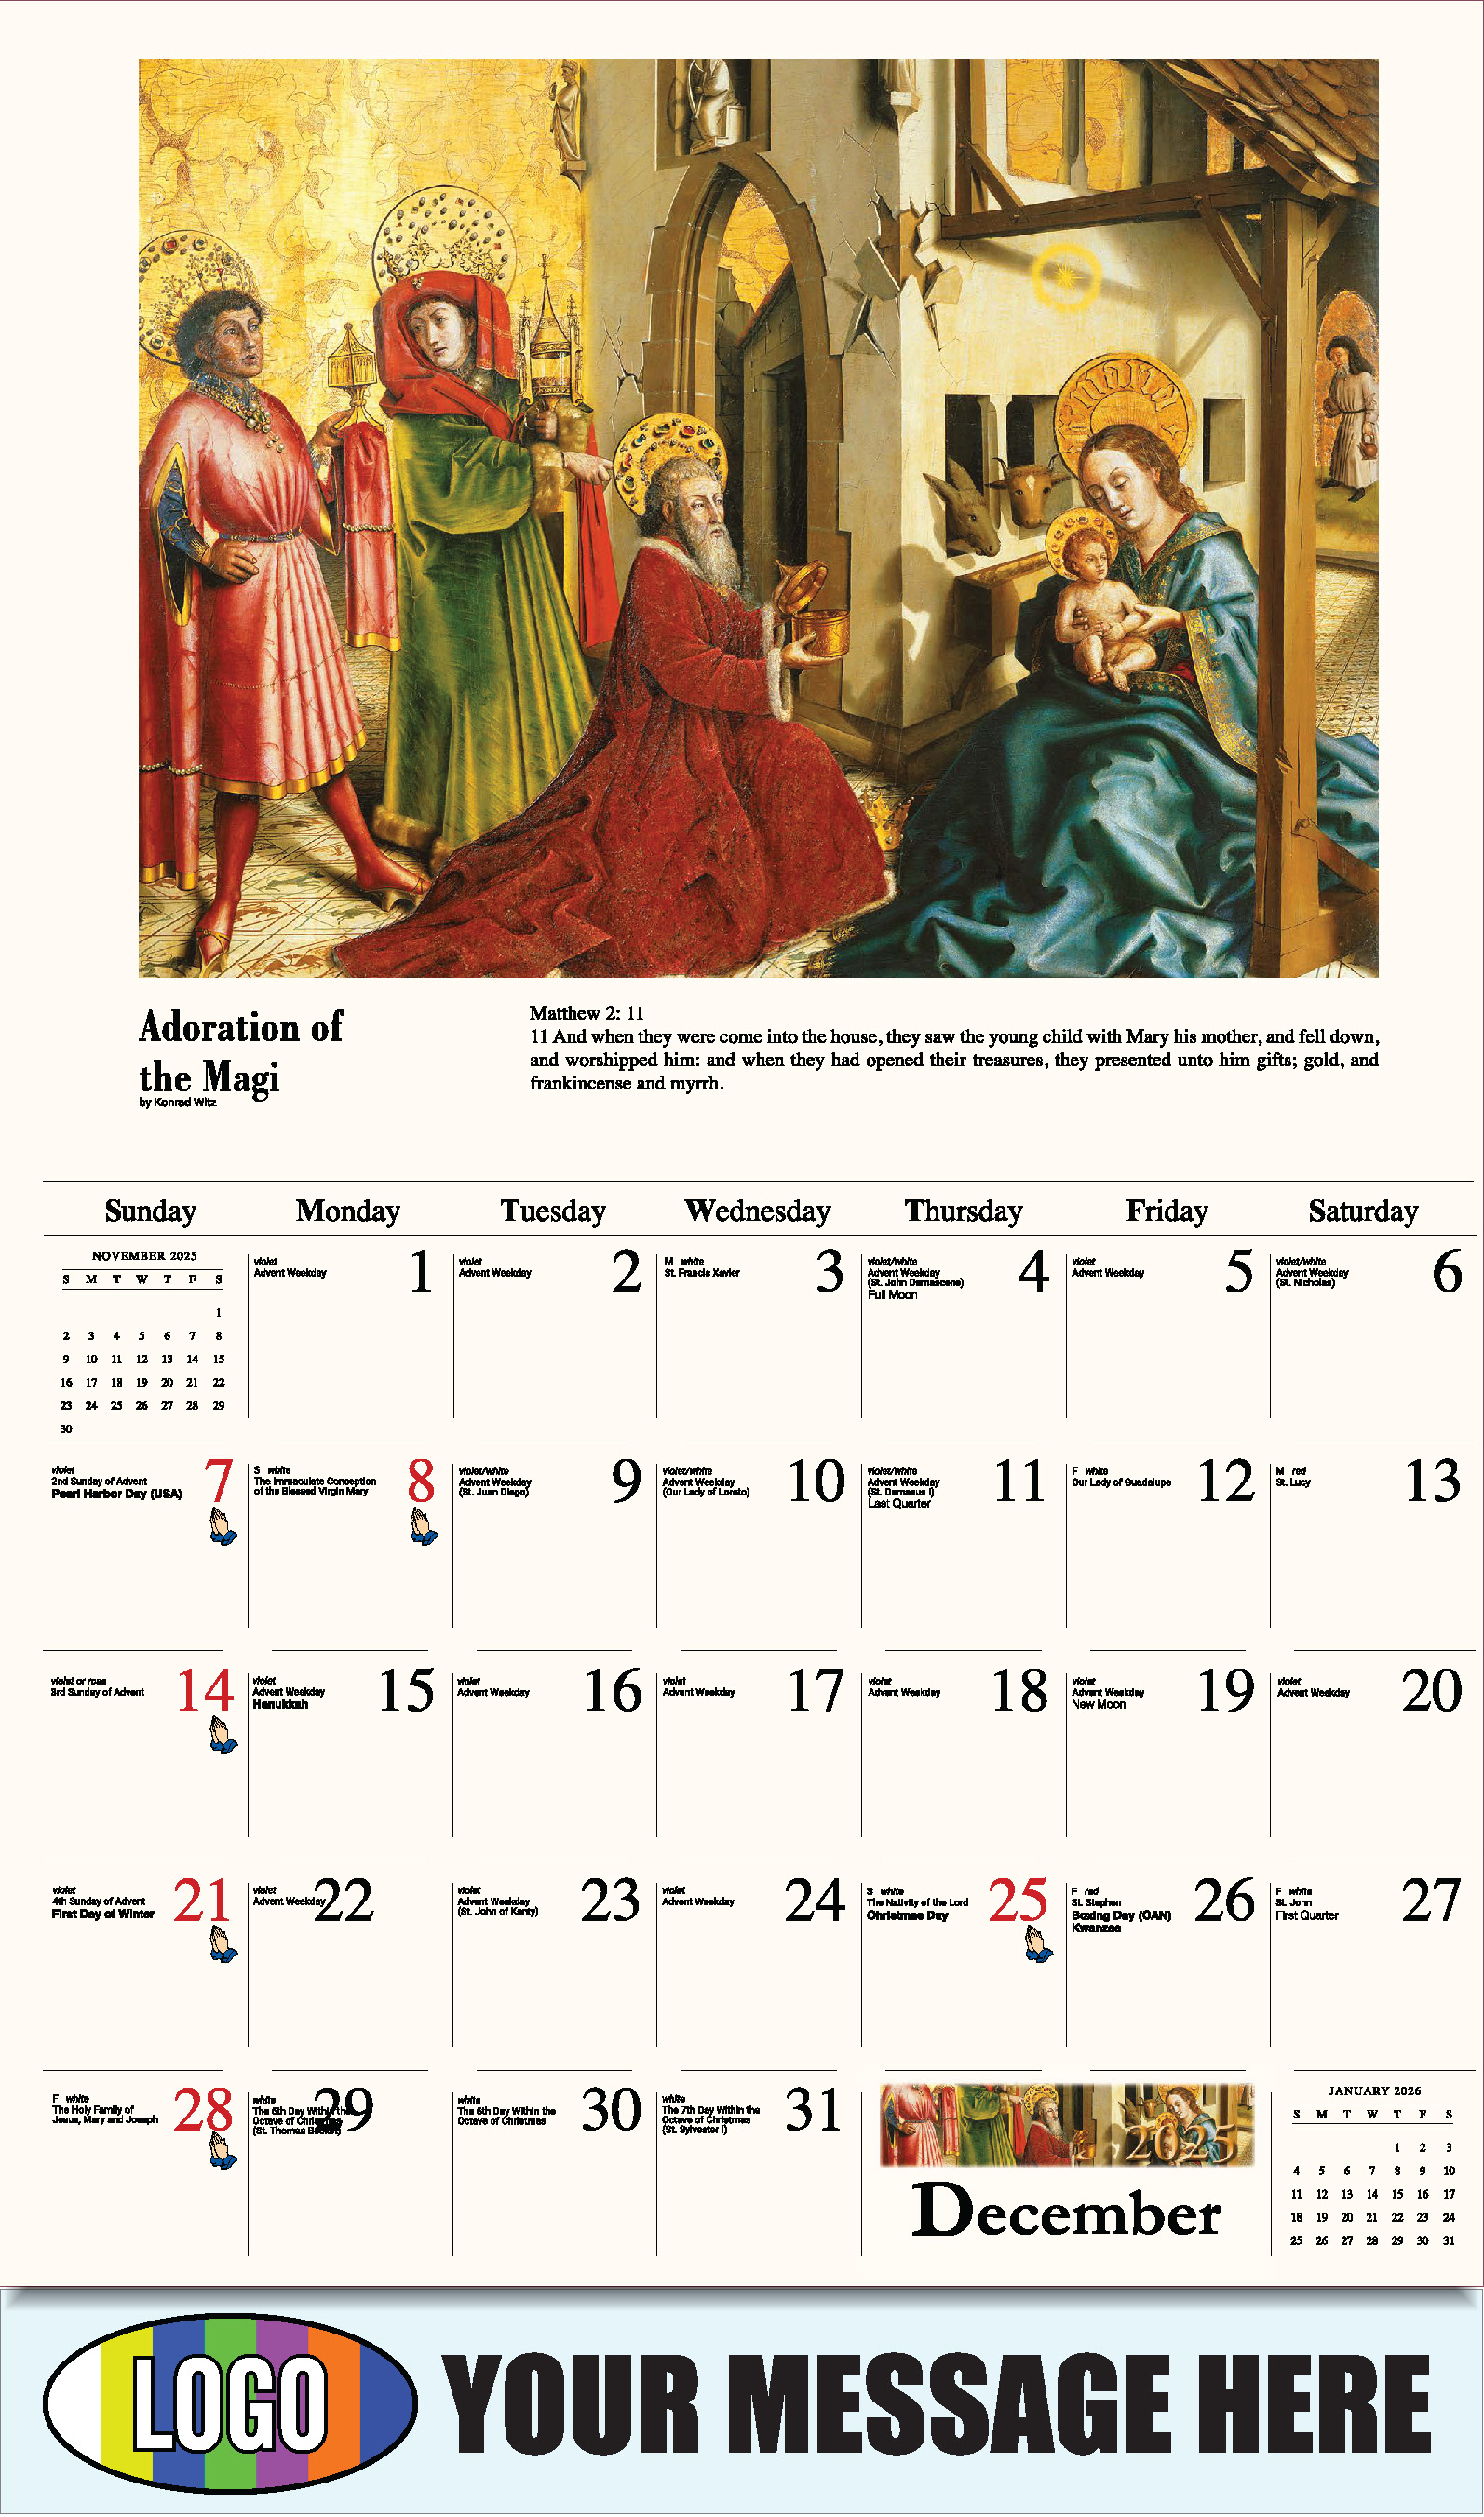 Catholic Inspirations 2025 Church Promotion Calendar - December